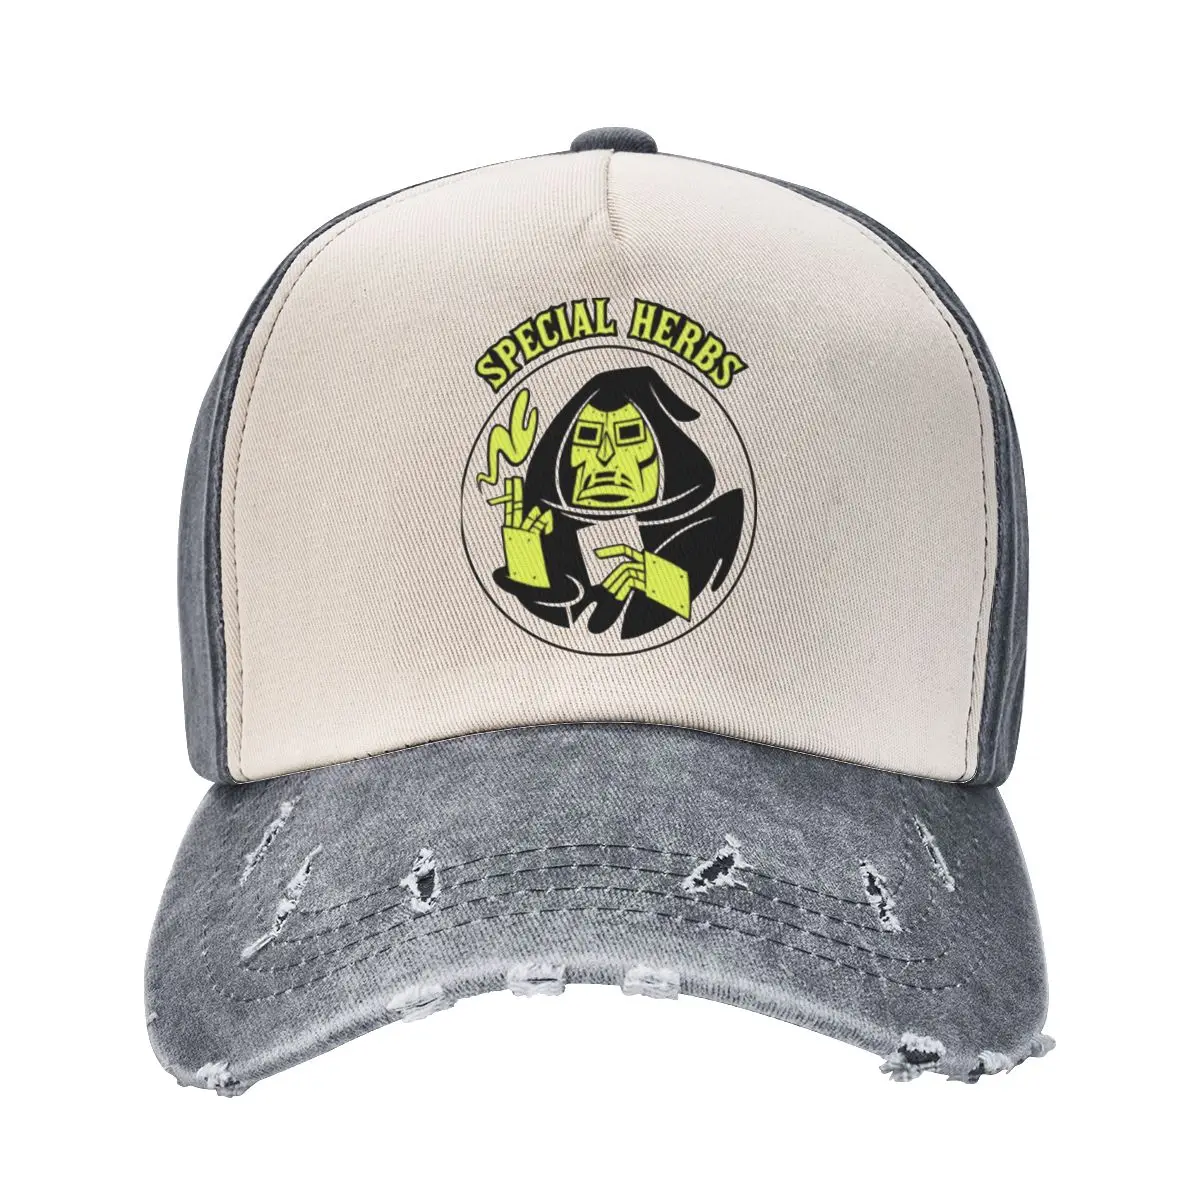 

MF DOOM Madvillain Stuff Unisex Style Trucker Hat Distressed Washed Caps Hat Classic Outdoor All Seasons Travel Gift Sun Cap